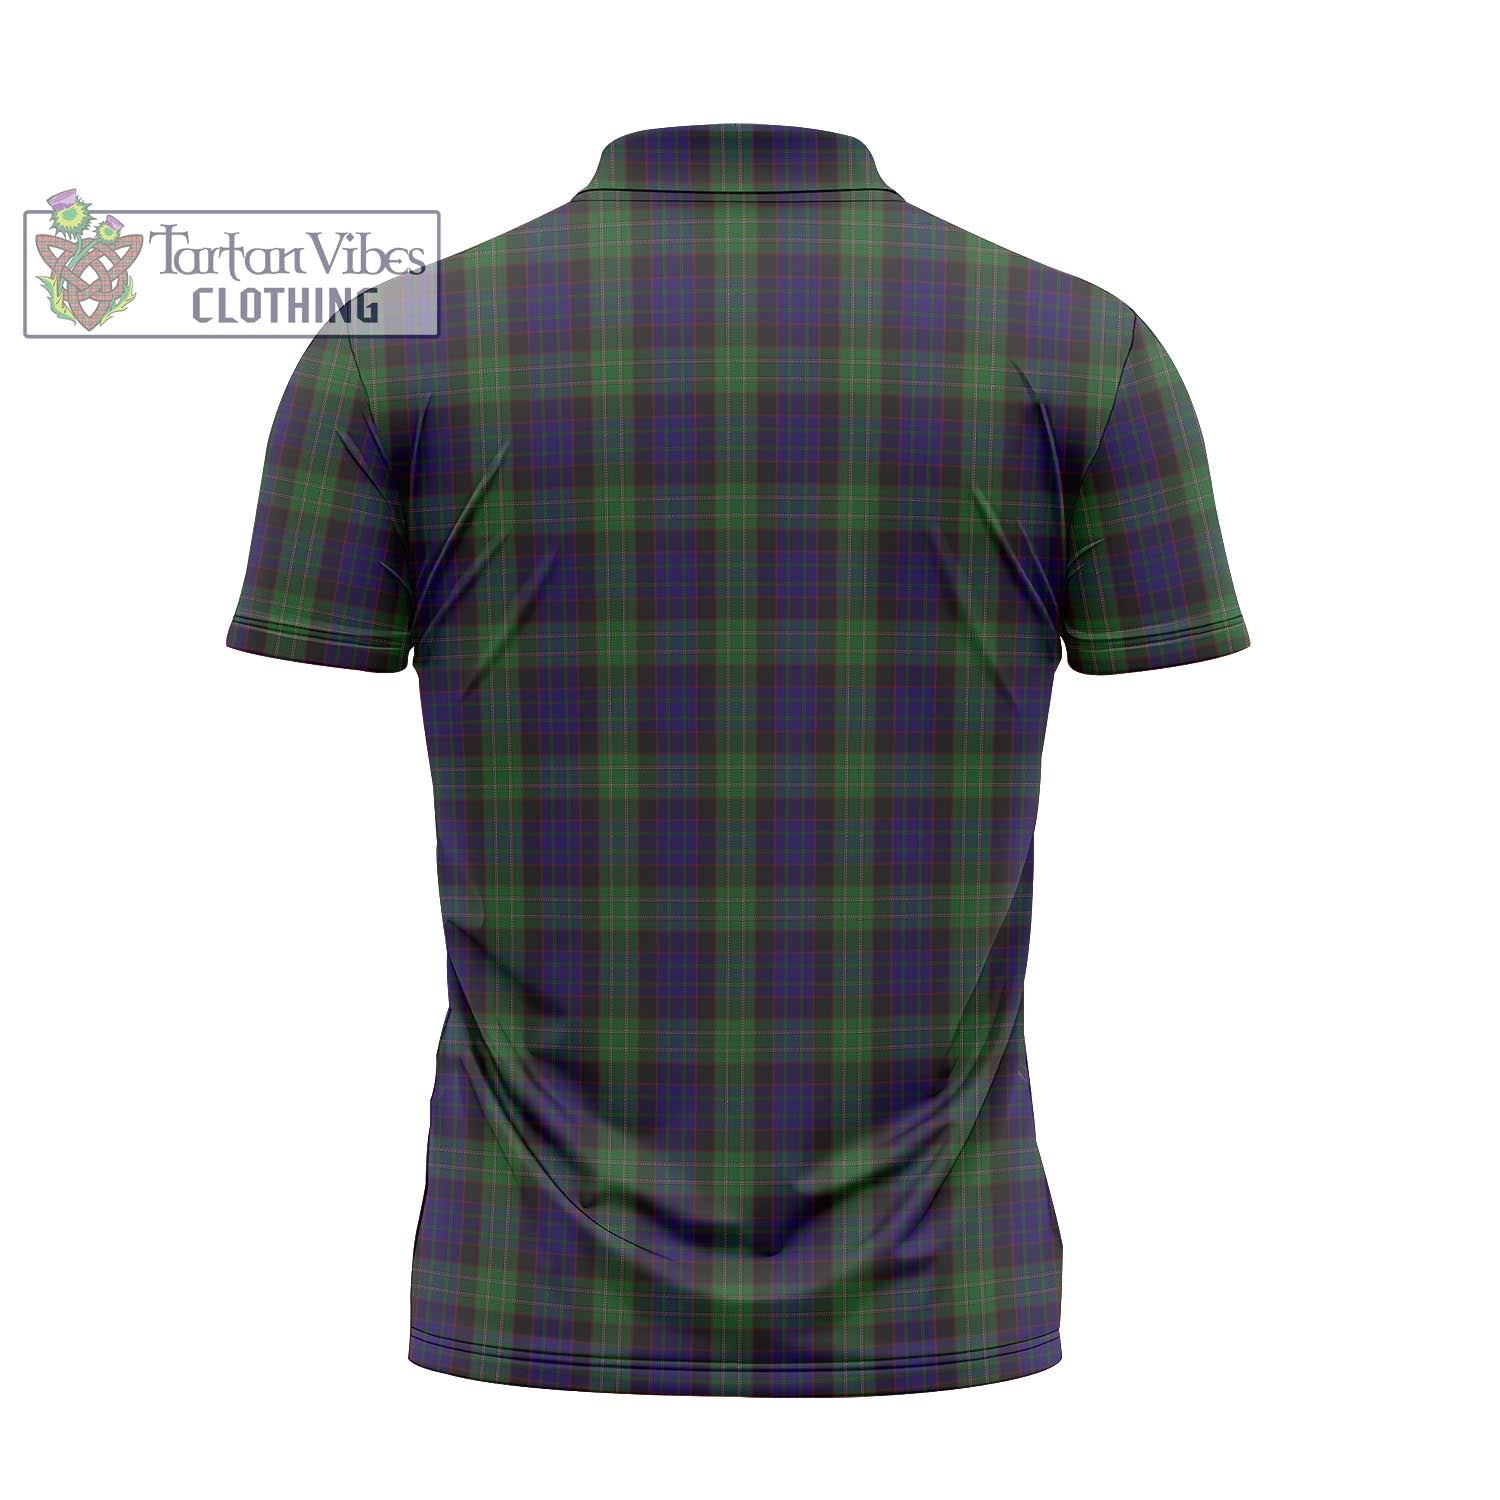 Tartan Vibes Clothing Nicolson Green Hunting Tartan Zipper Polo Shirt with Family Crest